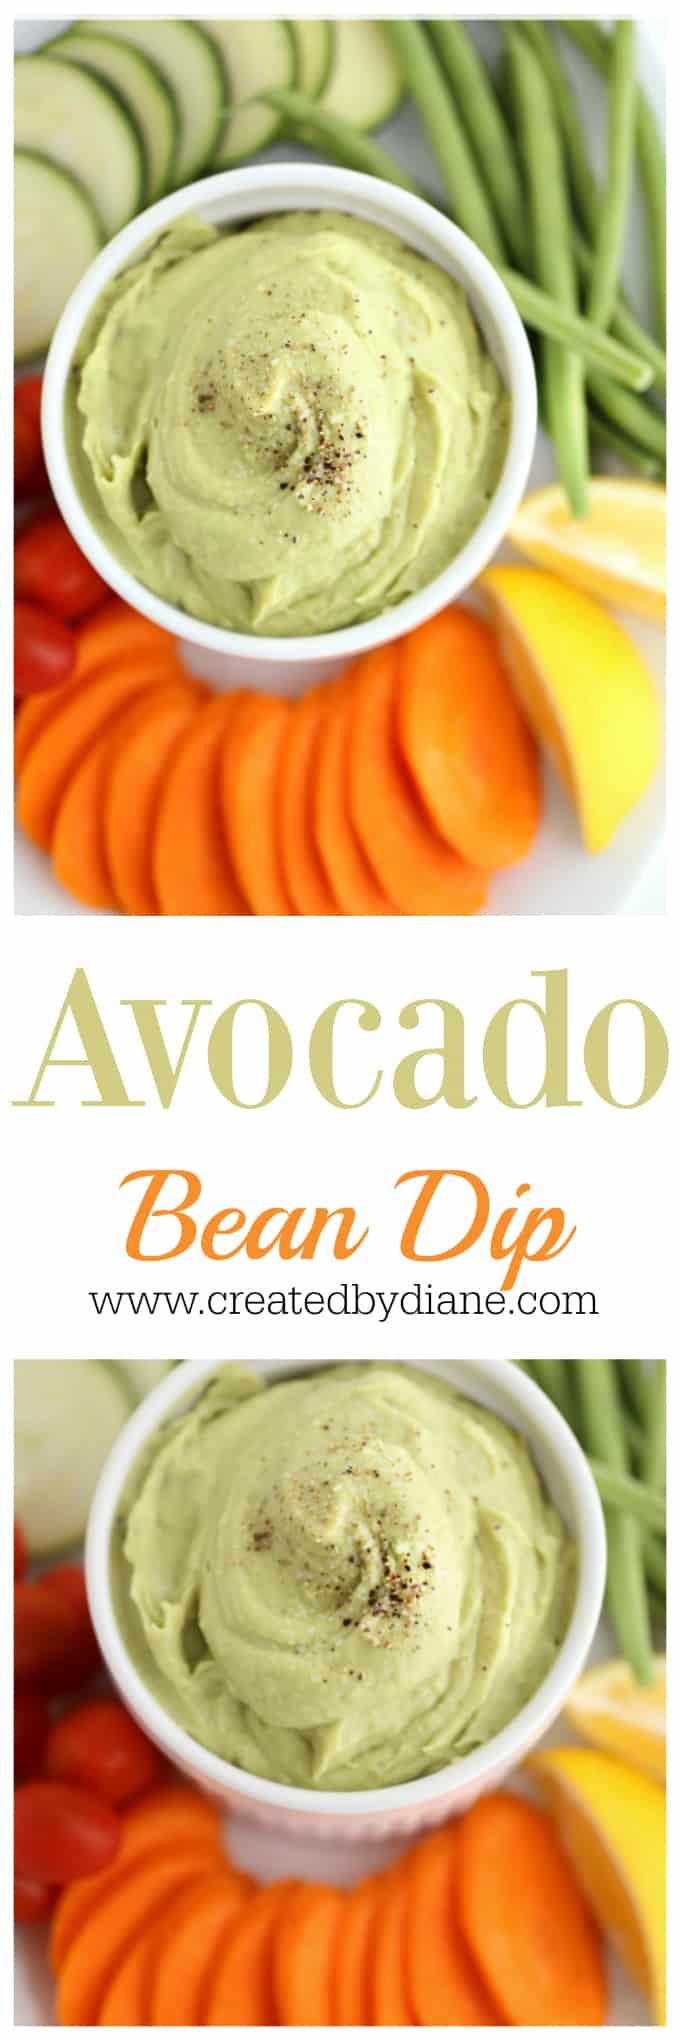 easy avocado bean dip with vegetables www.createdbydiane.com